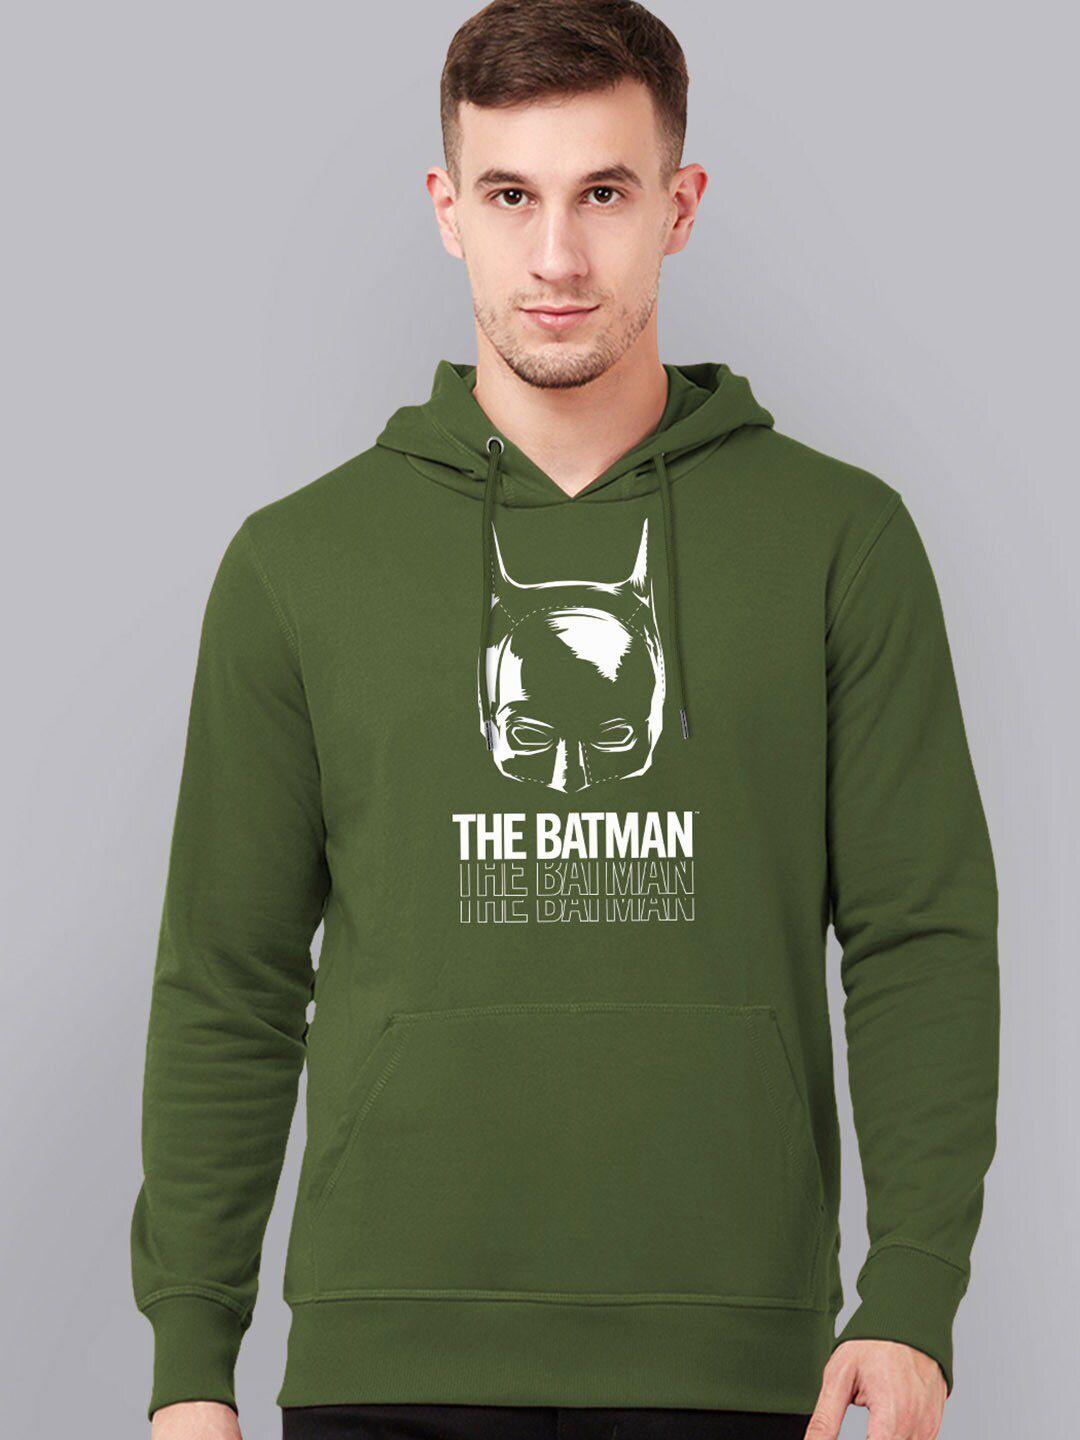 free-authority-men-graphic-printed-sweatshirts